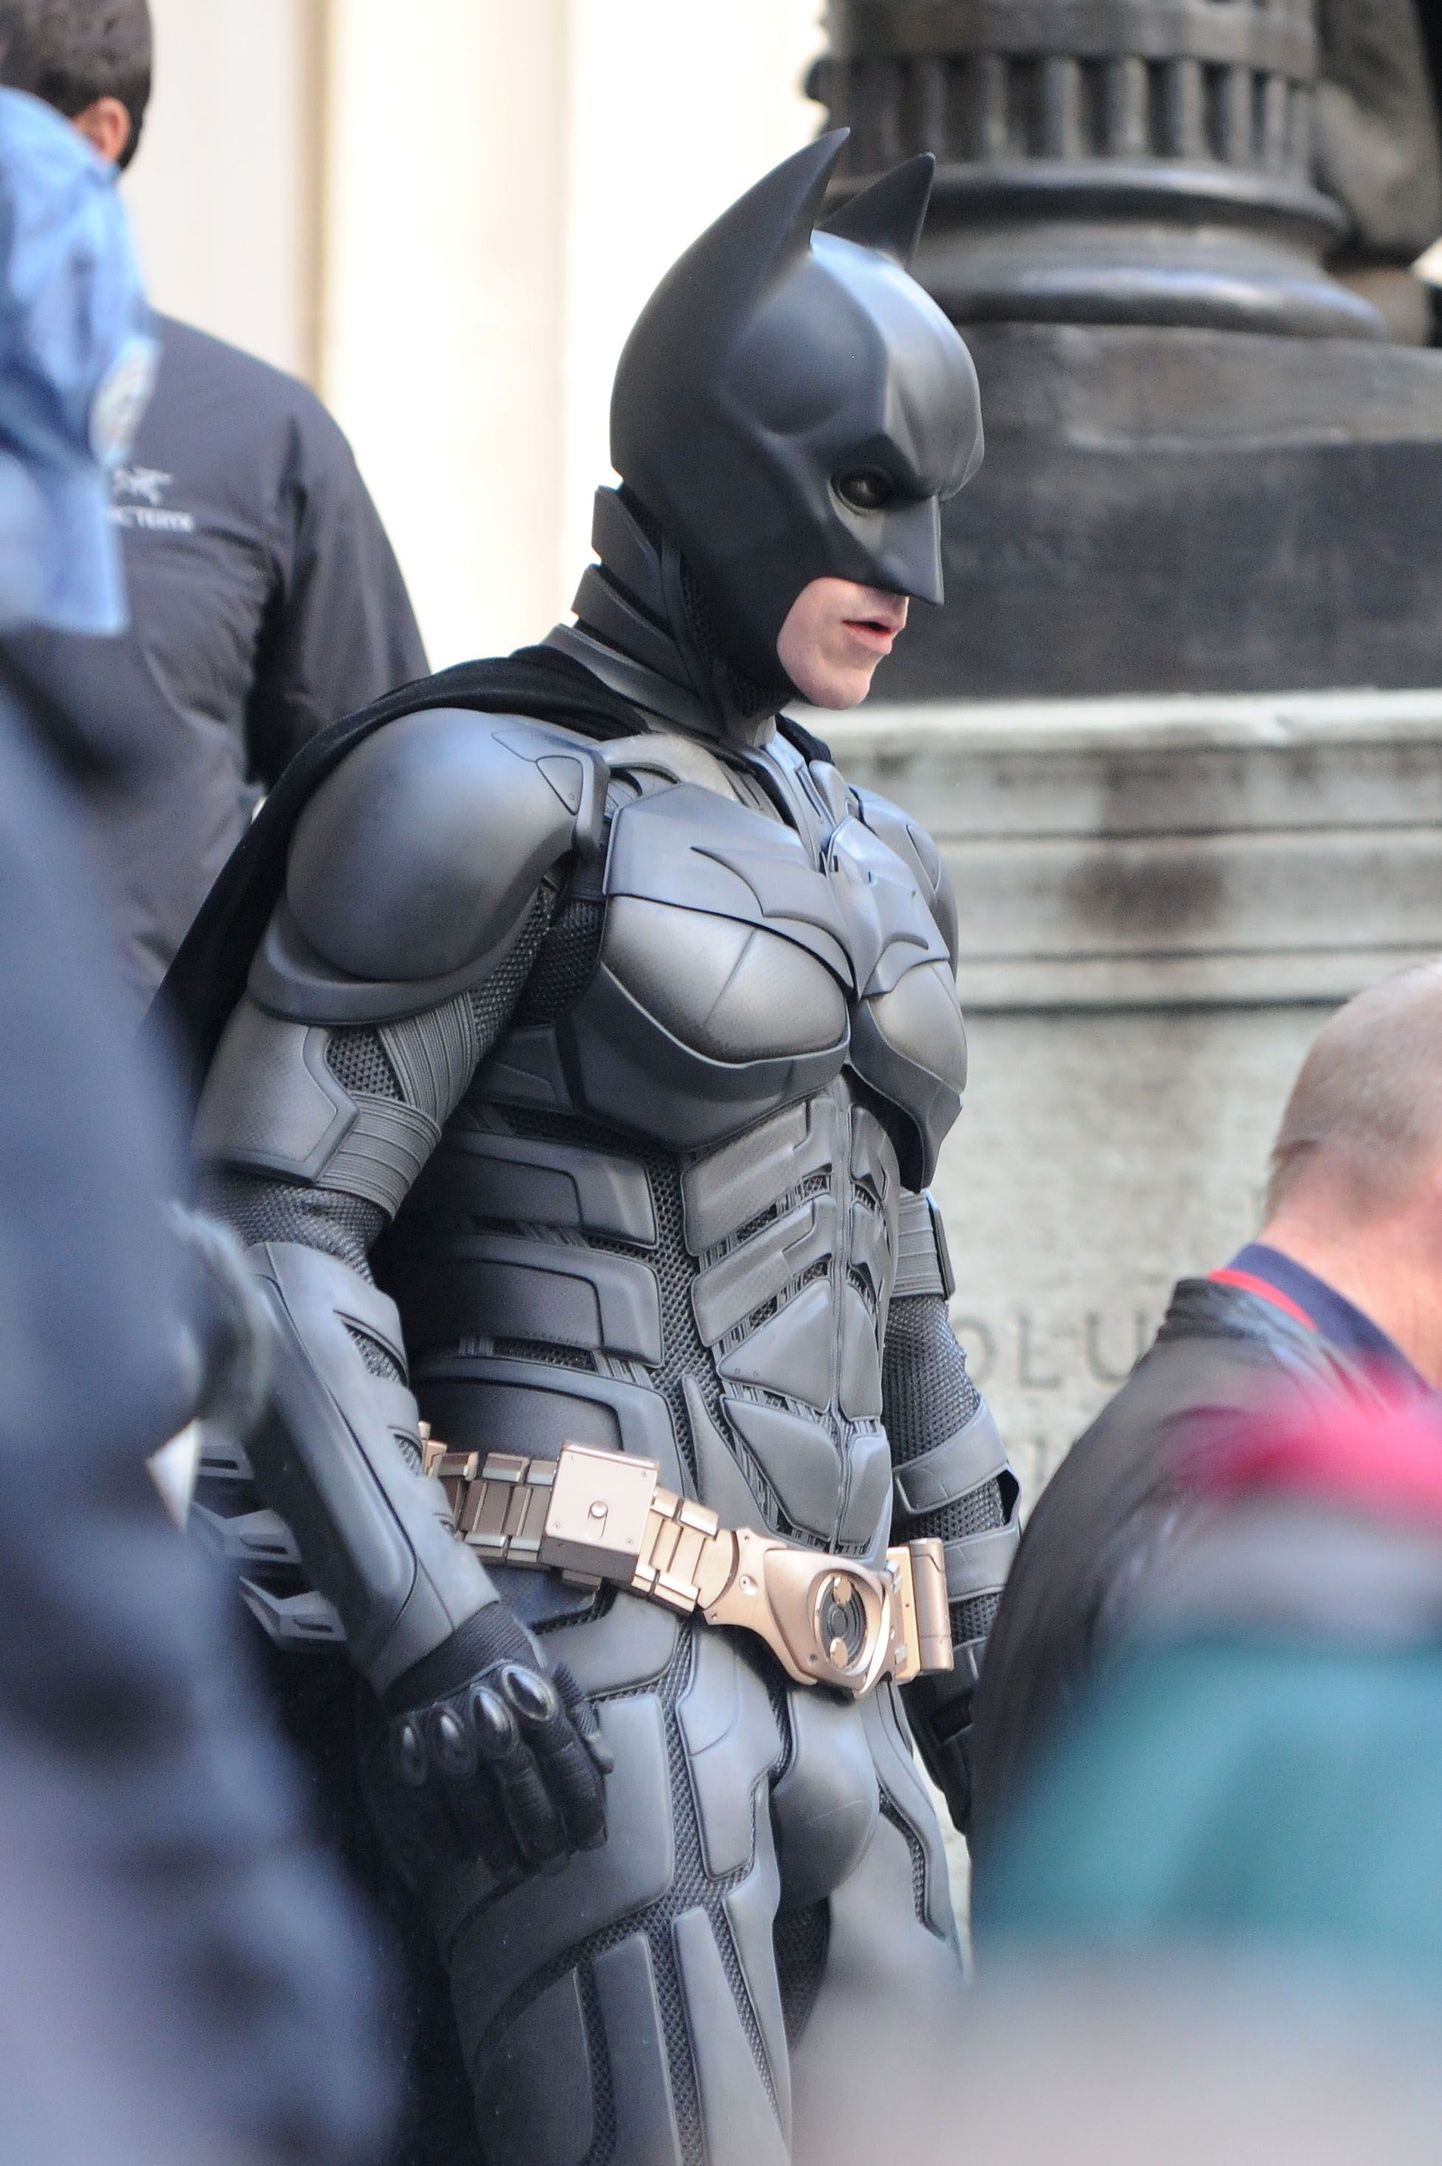 Actor Christian Bale works on the set of the latest Batman film, "The Dark Knight Rises" on Wall Street in New York on Sunday Nov. 6, 2011. (AP Photo/Darla Khazei) / SCANPIX Code: 436